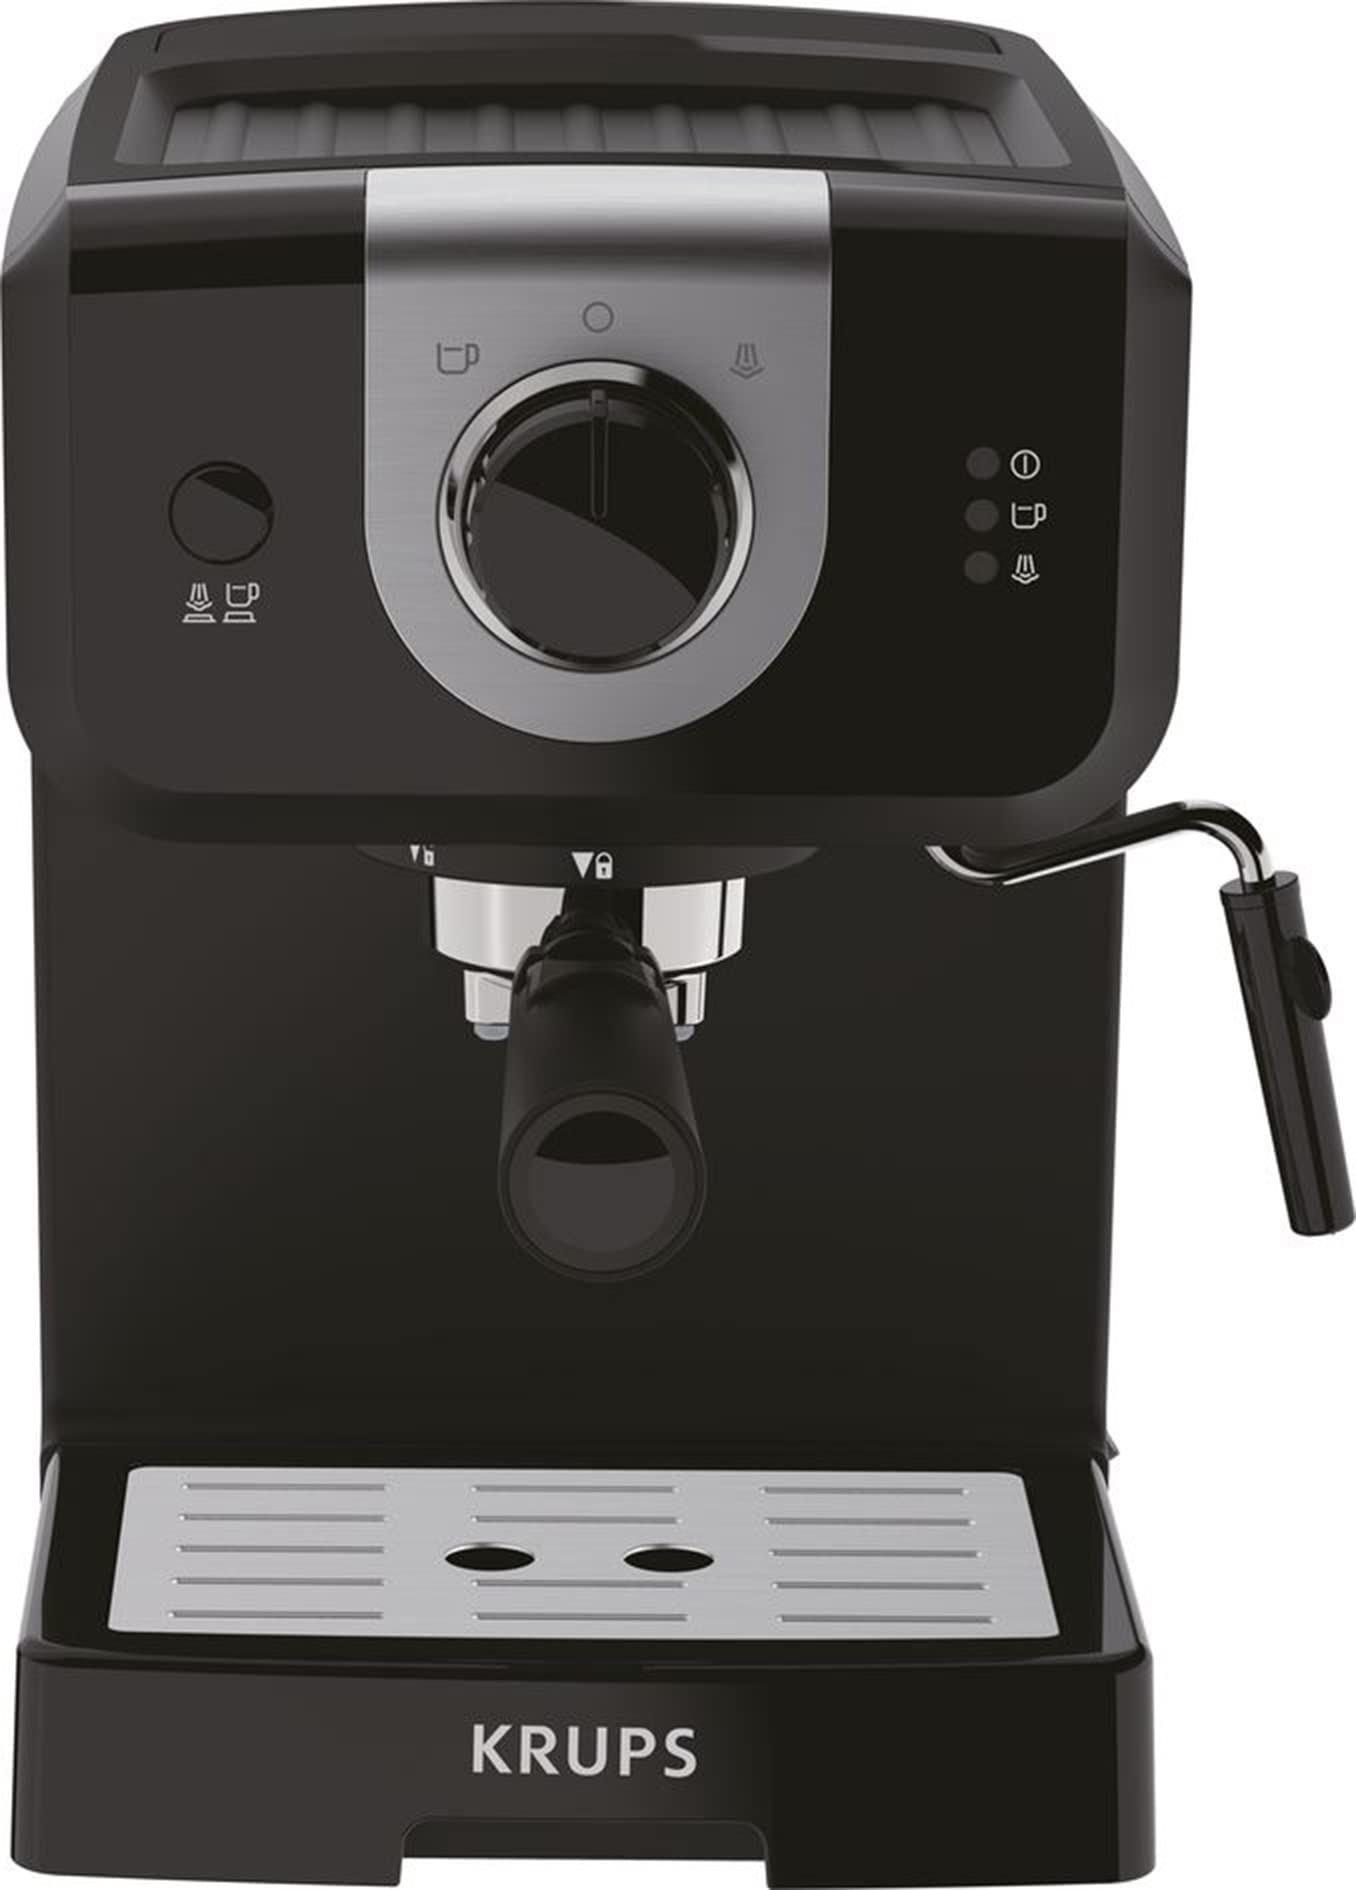 Krups Opio Steam and Pump XP320840 Espresso Coffee Machine - Black